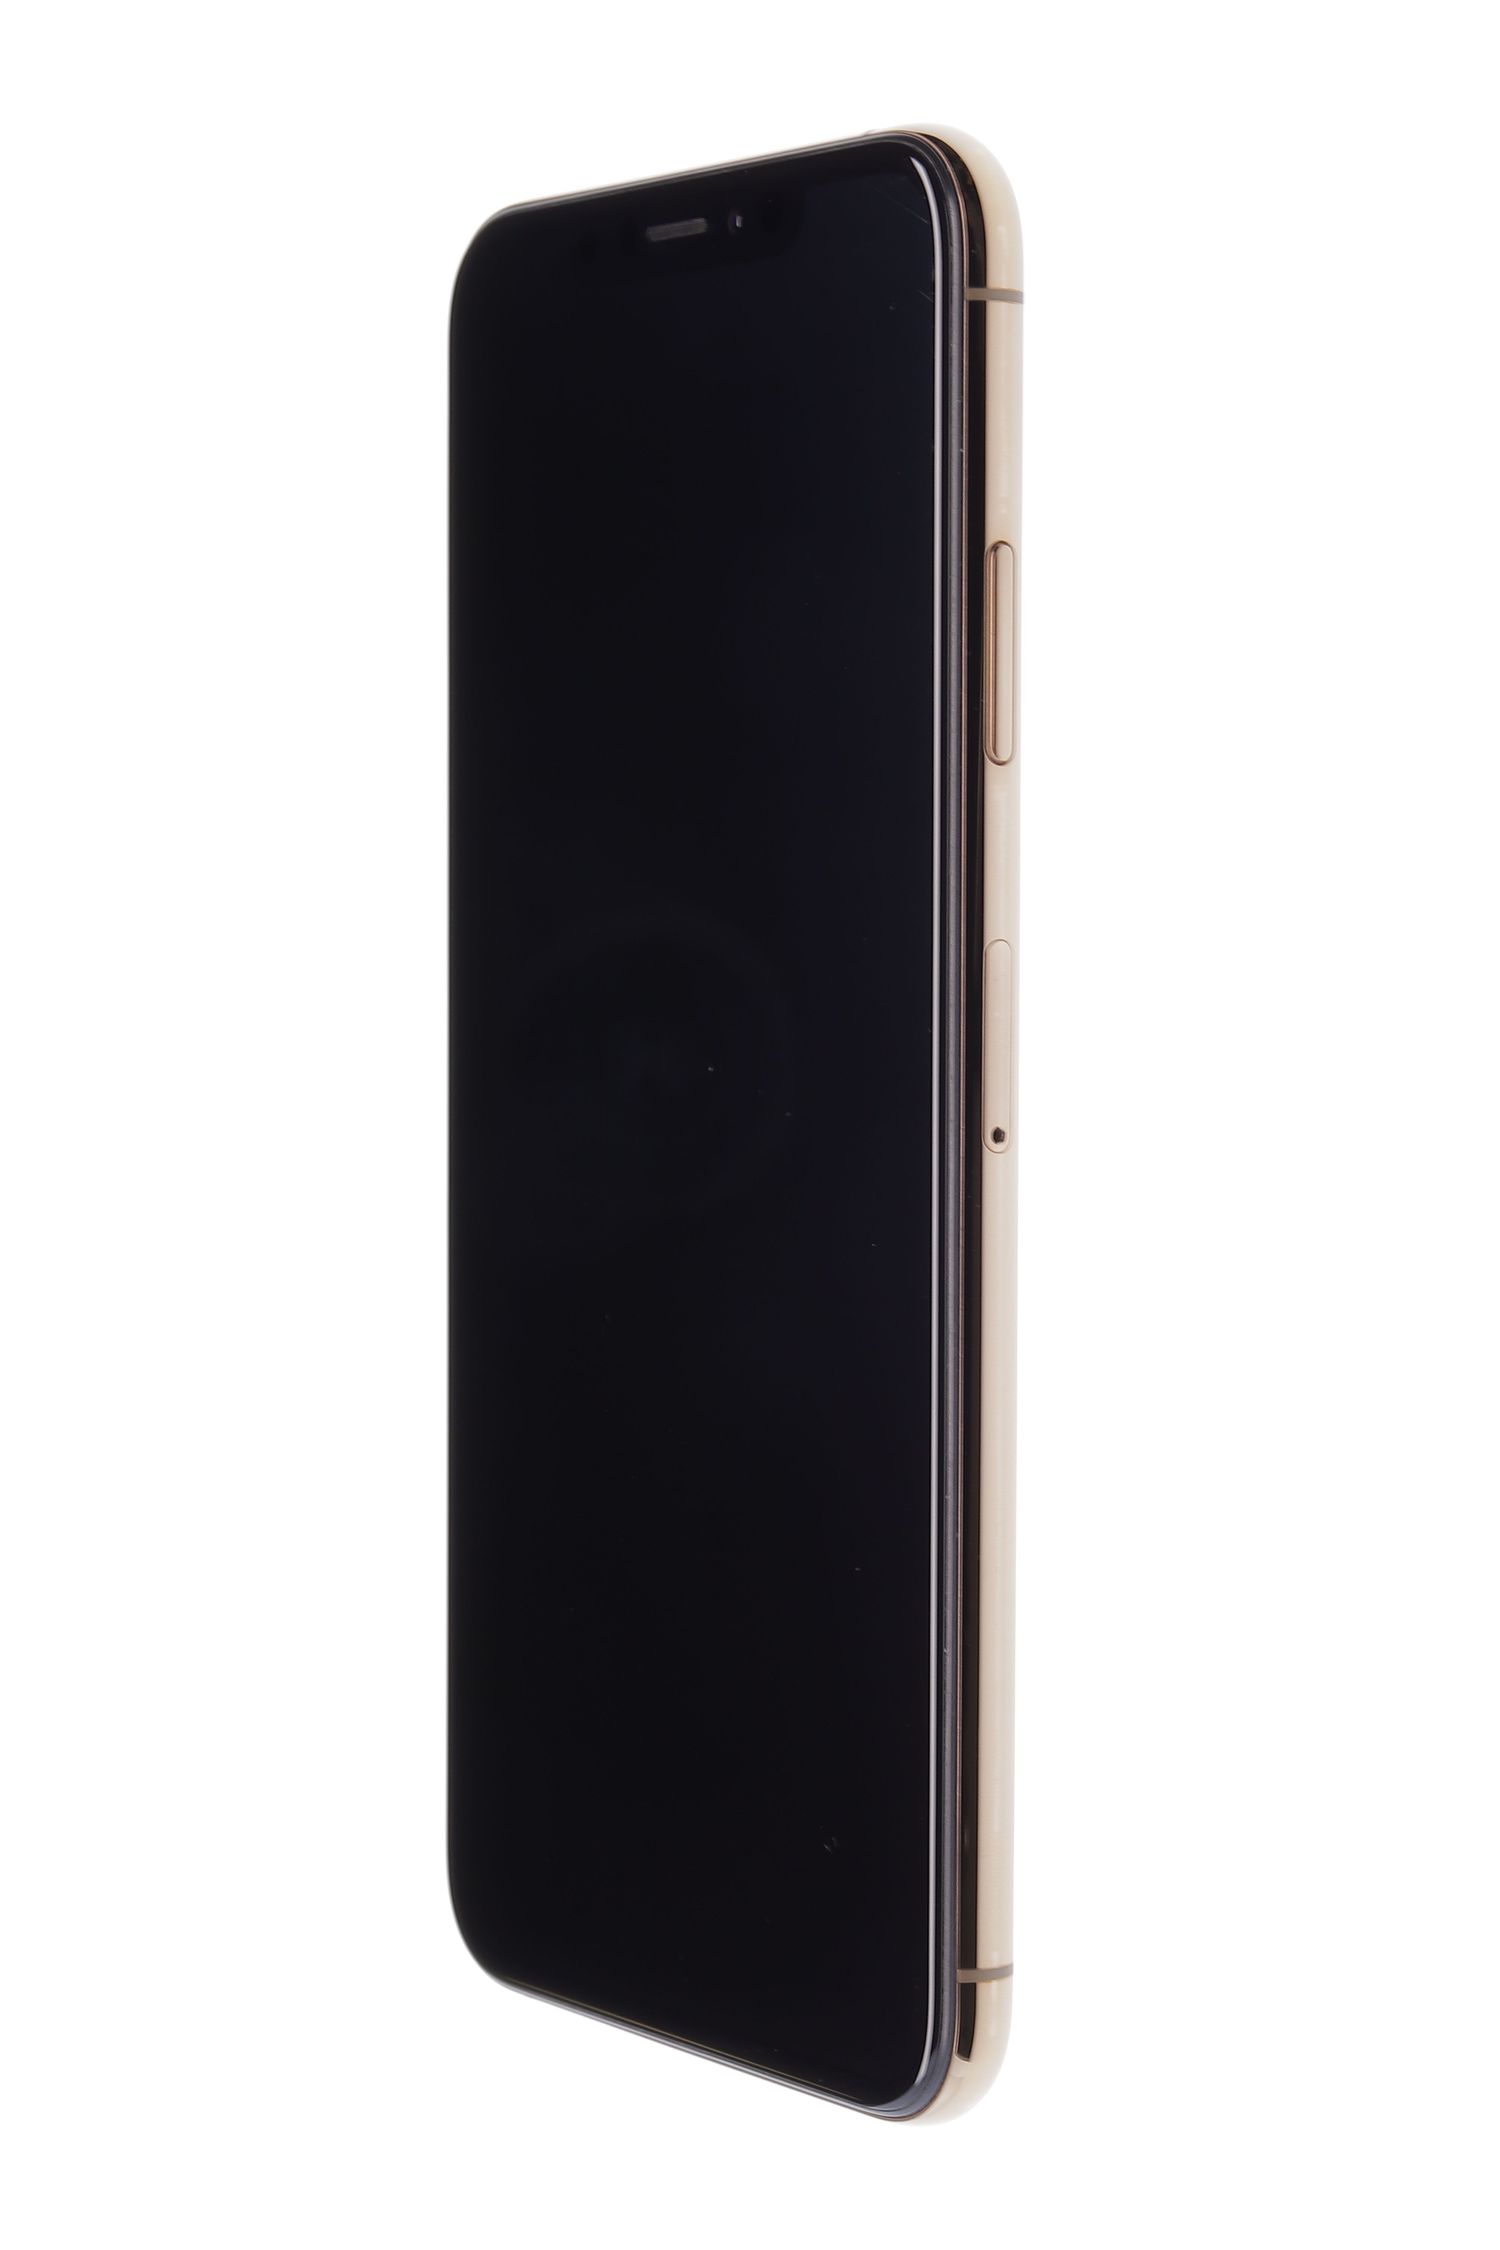 Mobiltelefon Apple iPhone XS Max, Gold, 256 GB, Excelent